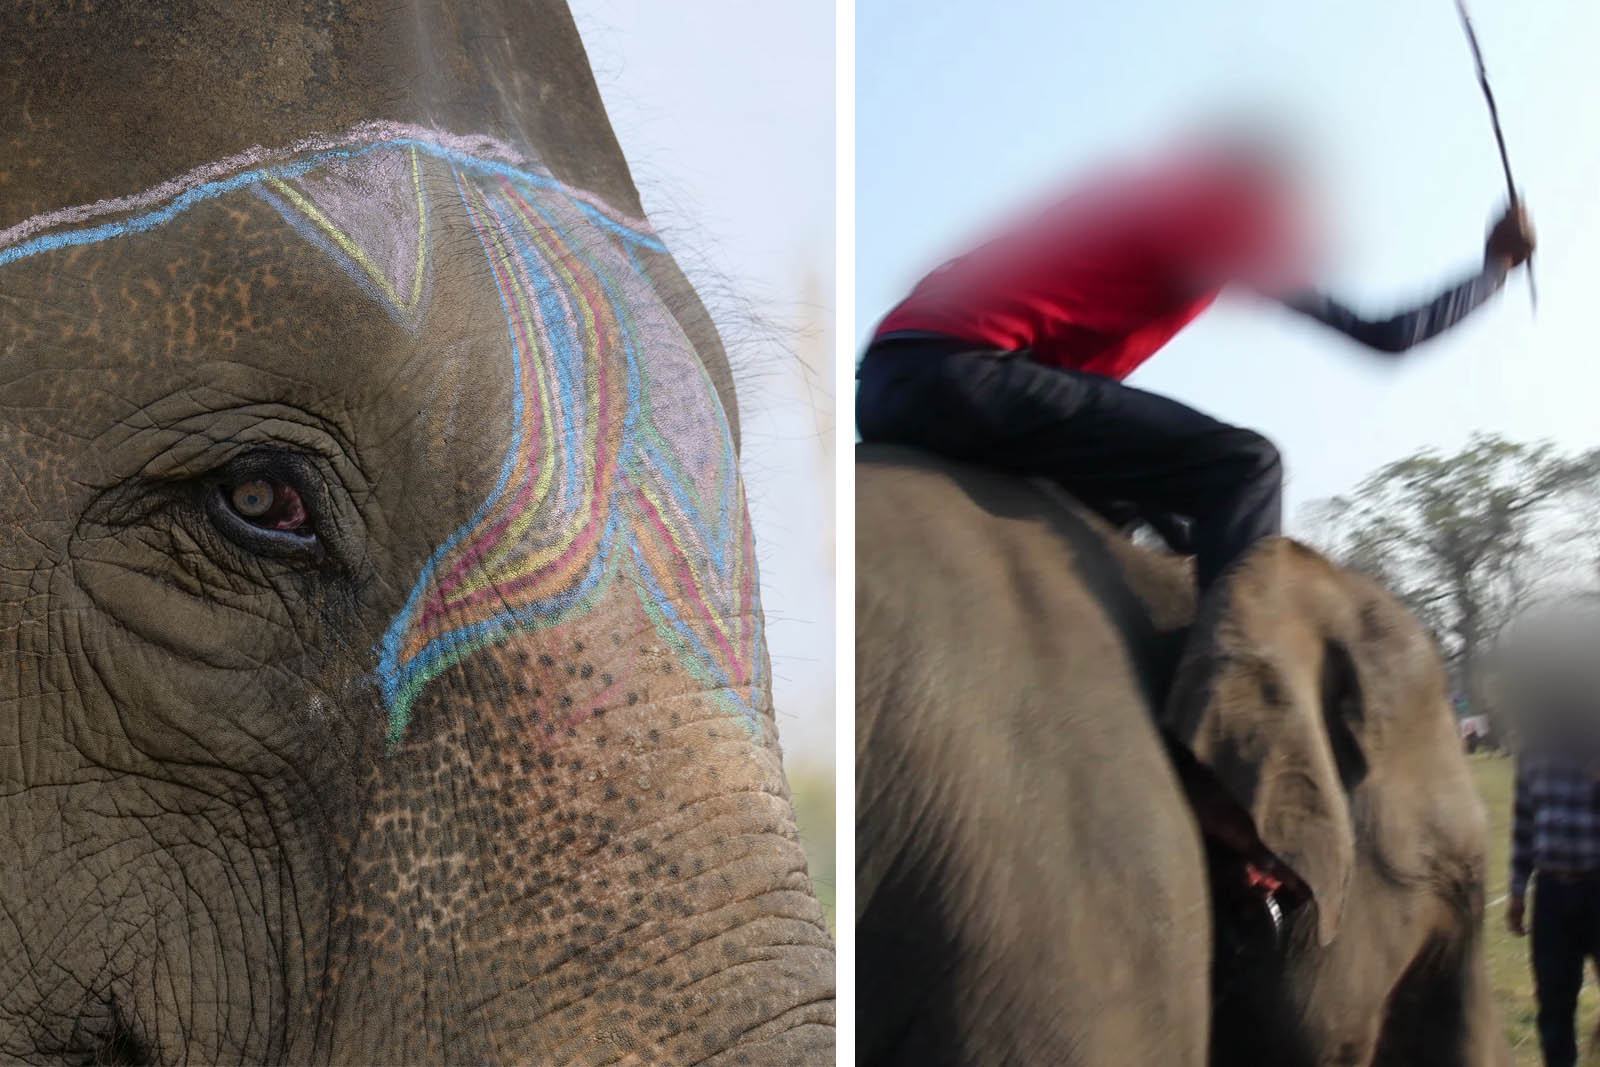 Chitwan-Elefantenfestival: Tiere mit Haken & Stock geschlagen